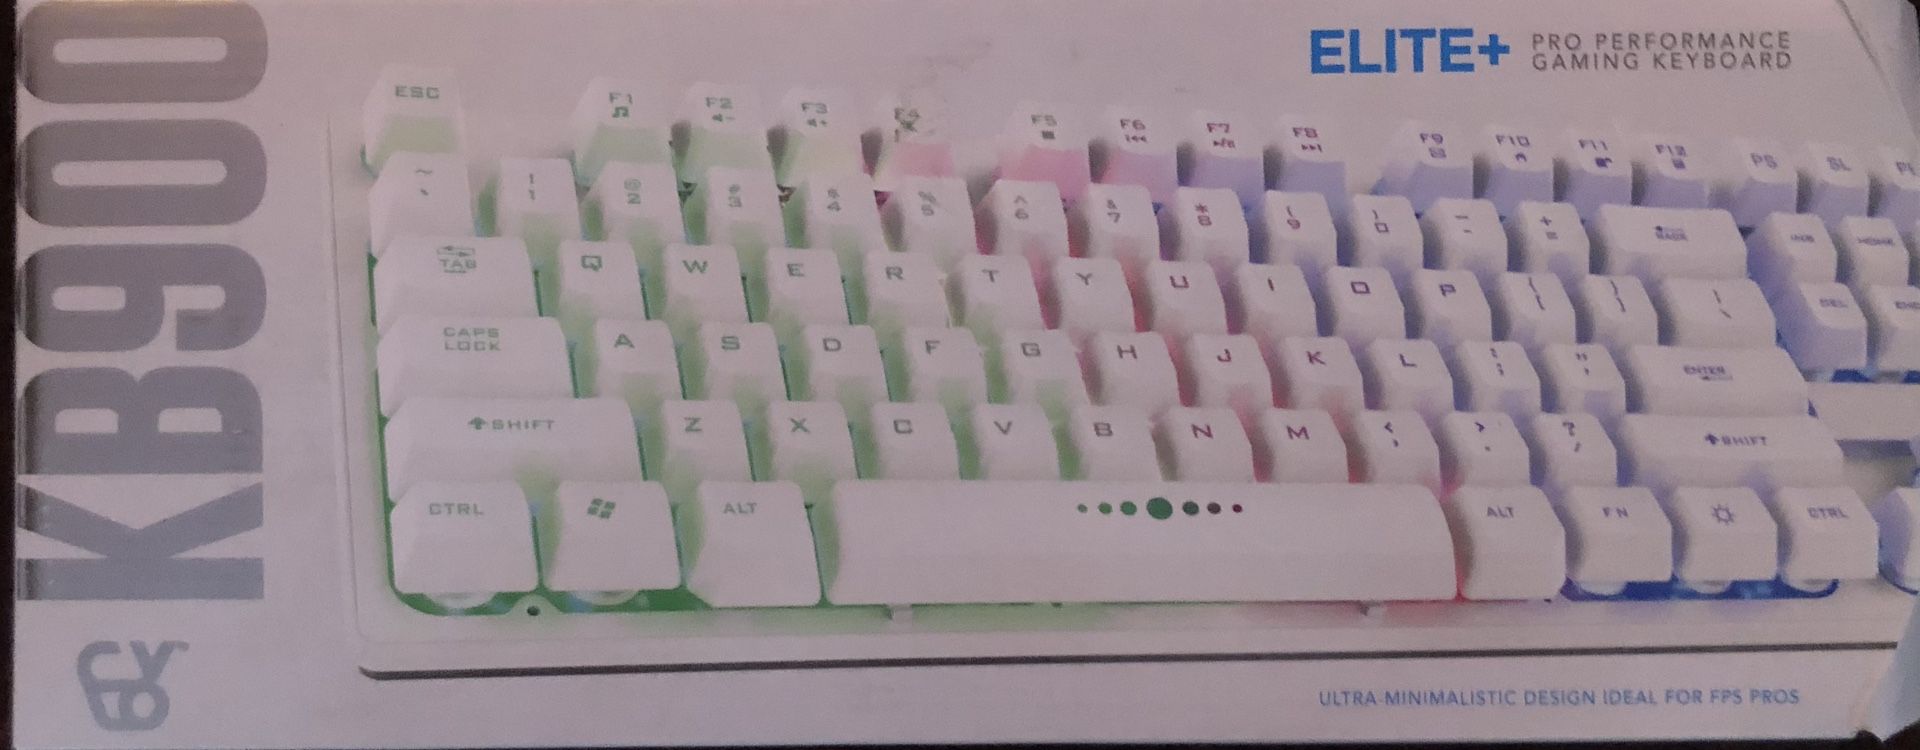 RGB KeyBoard In White